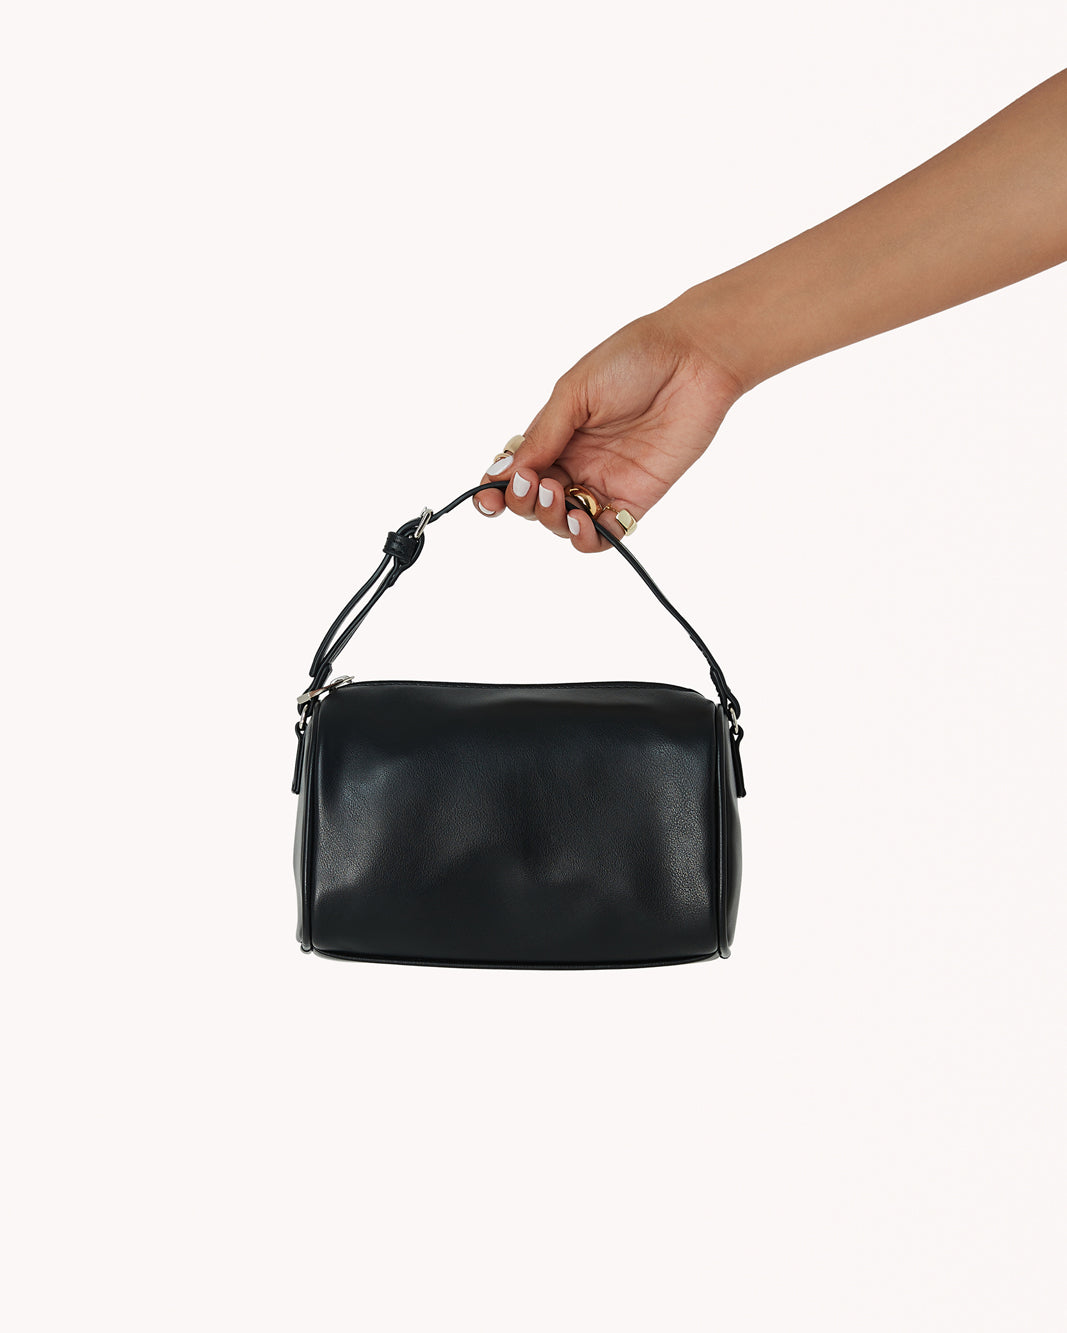 DONNA HANDLE BAG - BLACK-Handbags-Billini-O/S-Billini